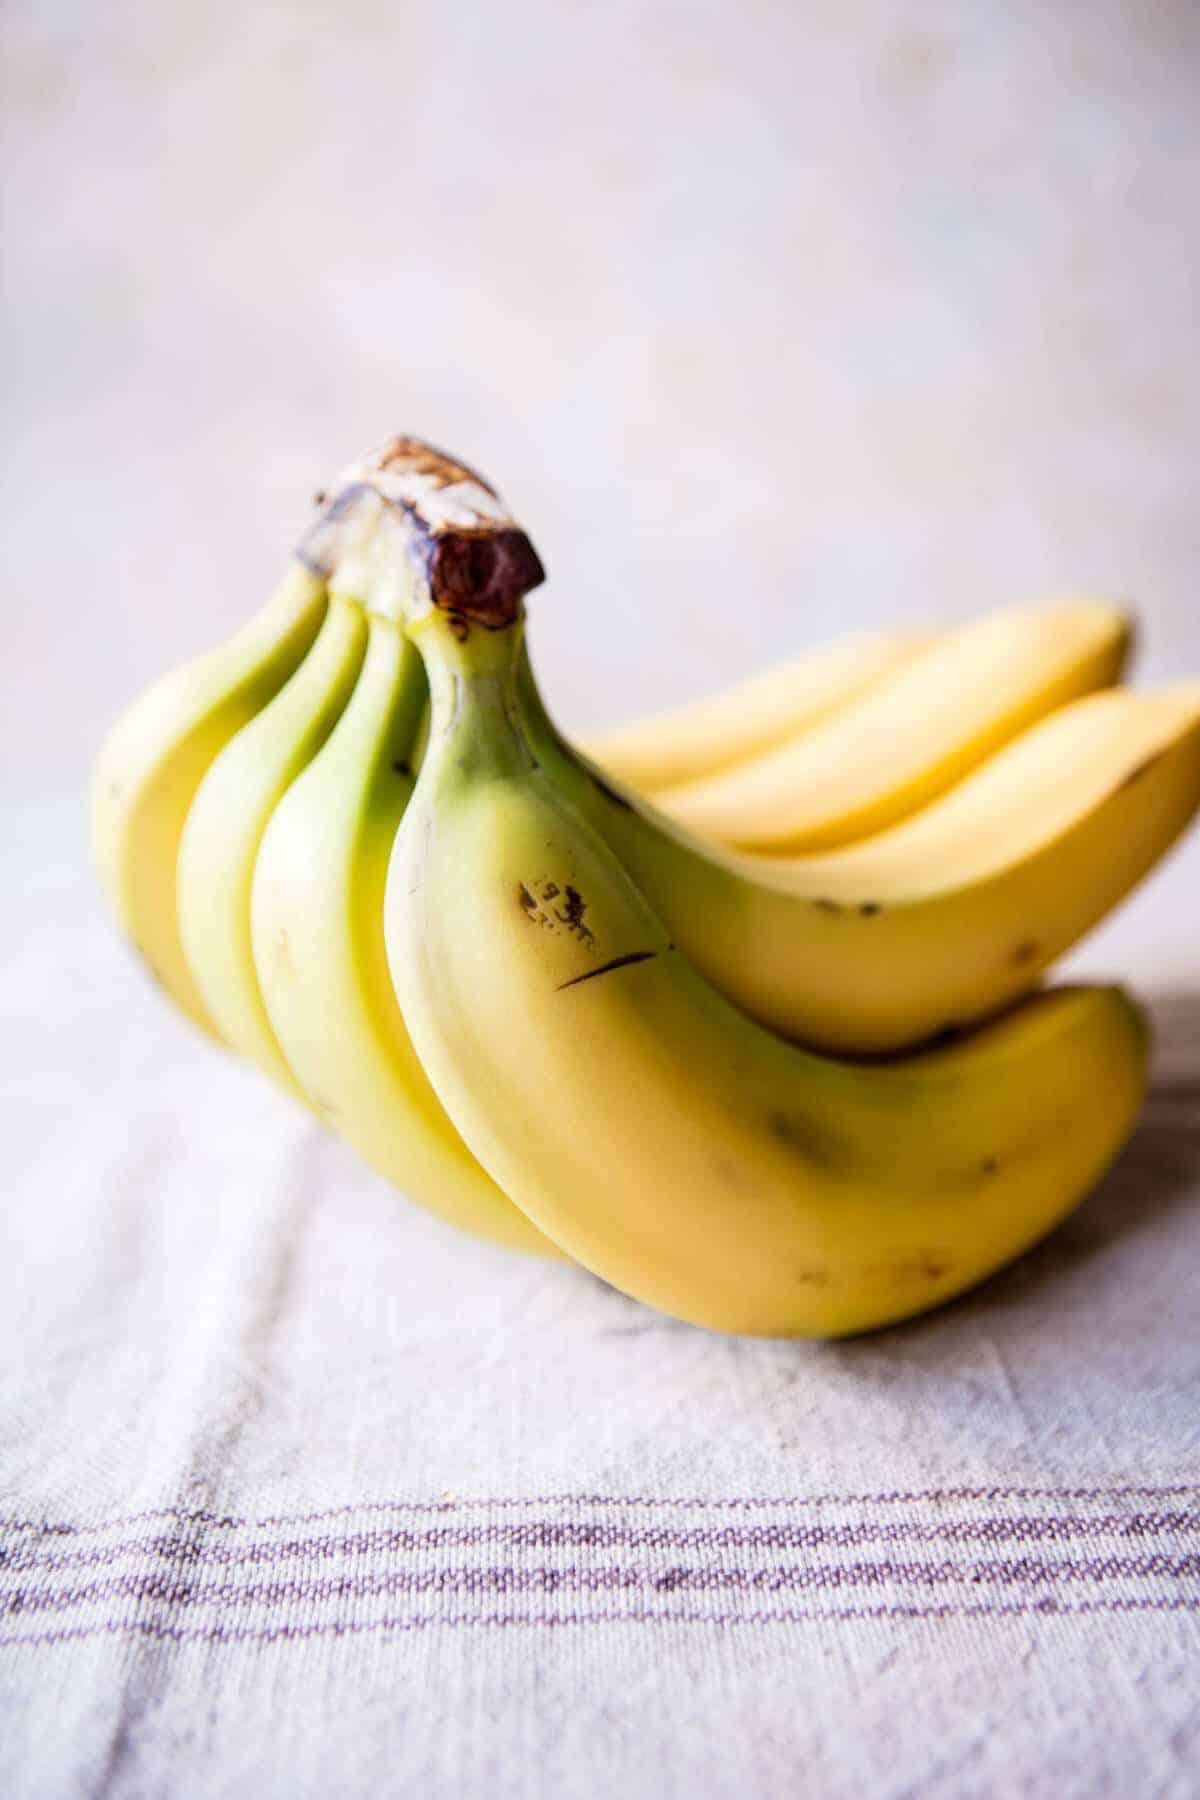 Healthy Chai Banana Pancakes | halfbakedharvest.com @hbharvest